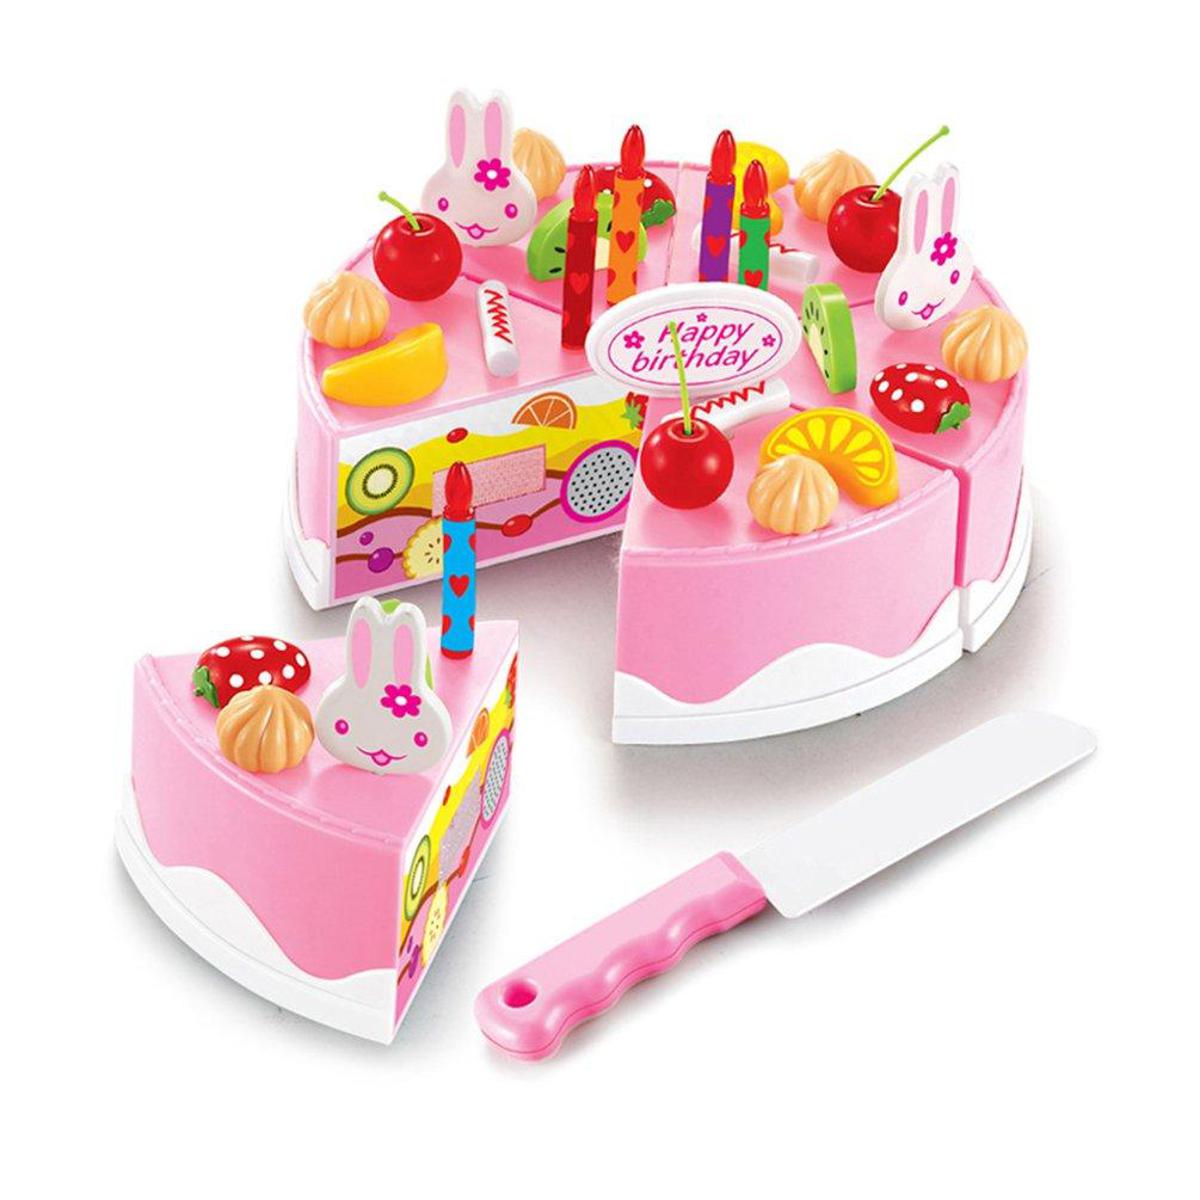 Bhagya Cake Crafts - Happy birthday Enuki Kitchen set ☕🍴🔪🍰🍪🥘🍳🍗🍕🍔  Bhagya Cake Crafts 0715758213 Whatsapp / viber / imo | Facebook